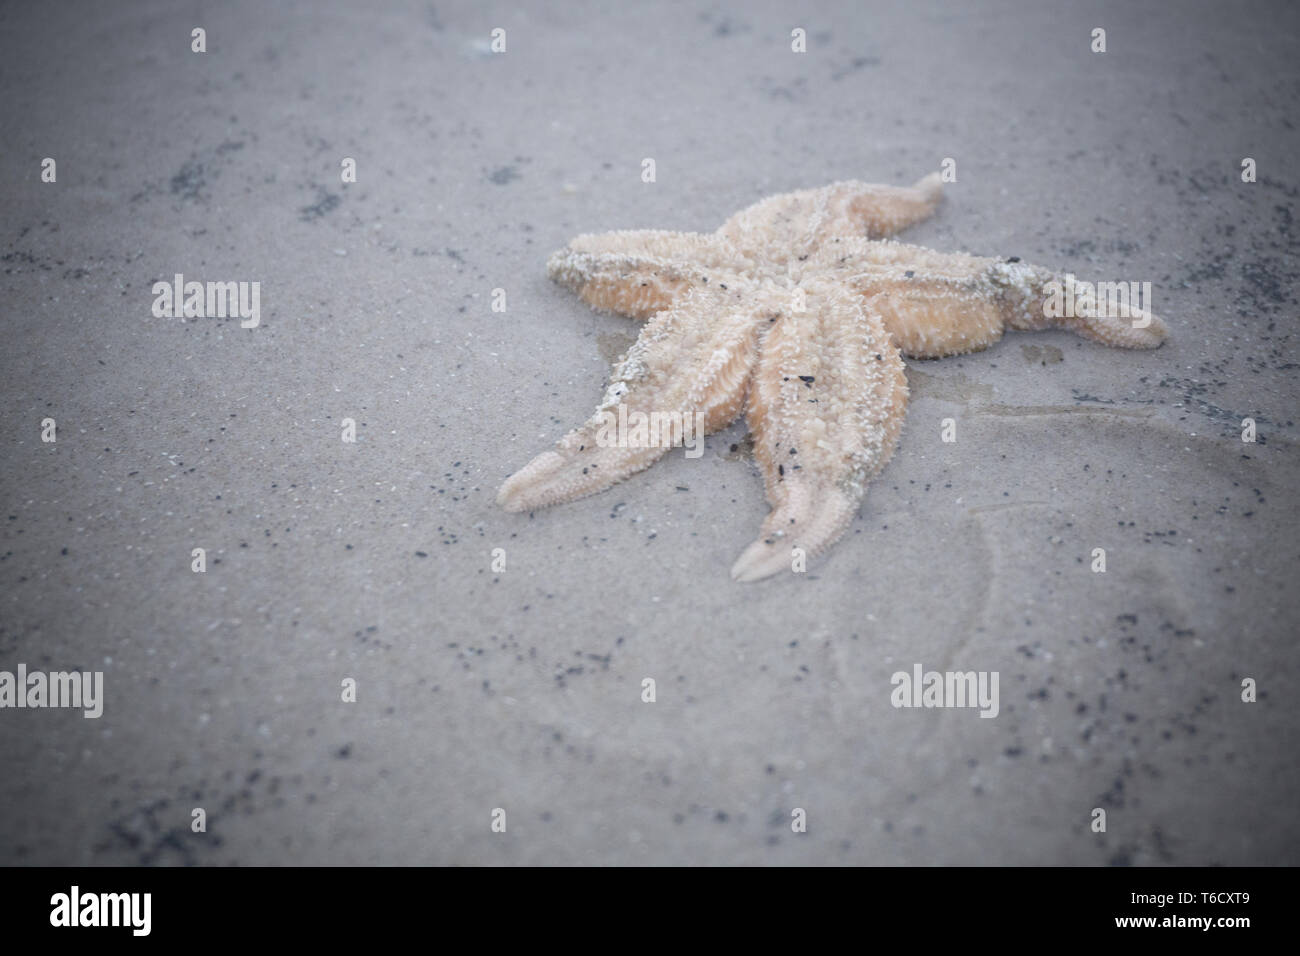 Seestern am Strand / sea star on beach Stock Photo